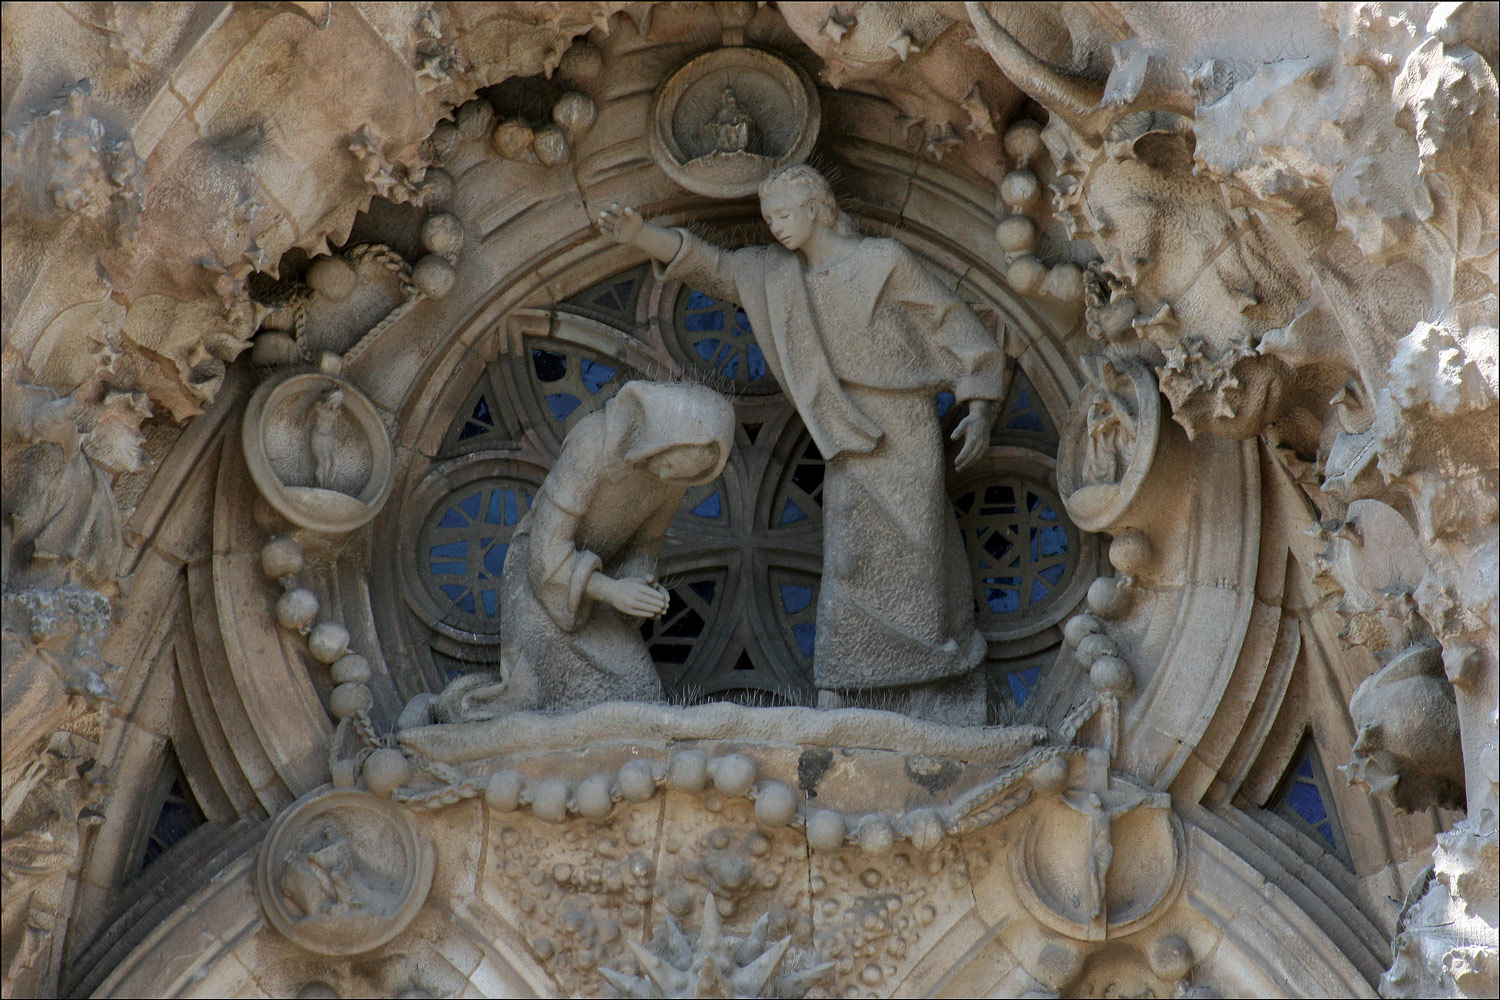 Sagrada Familia by Gaudi - Basilica in Barcelona, Spain - 137 Year Project 21